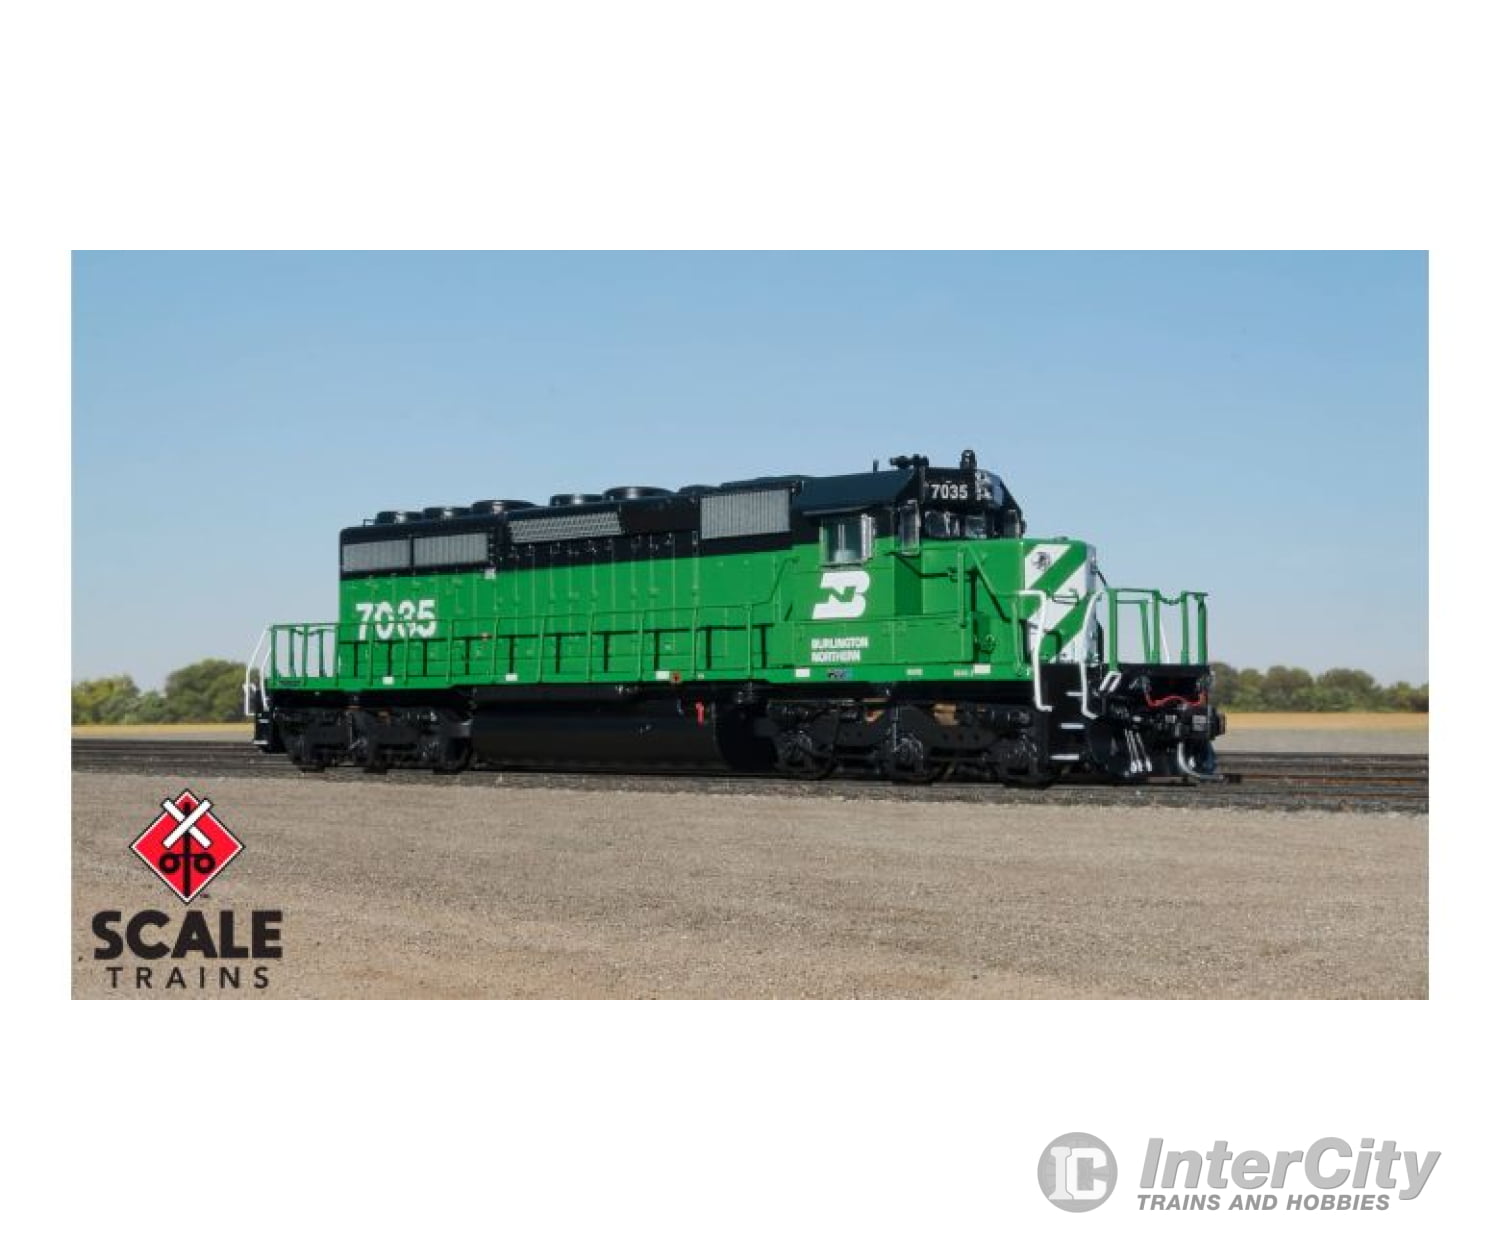 Scale Trains Sxt33783 Rivet Counter N Emd Sd40-2 Bn Burlington Northern #7035 Dcc/Sound Locomotives